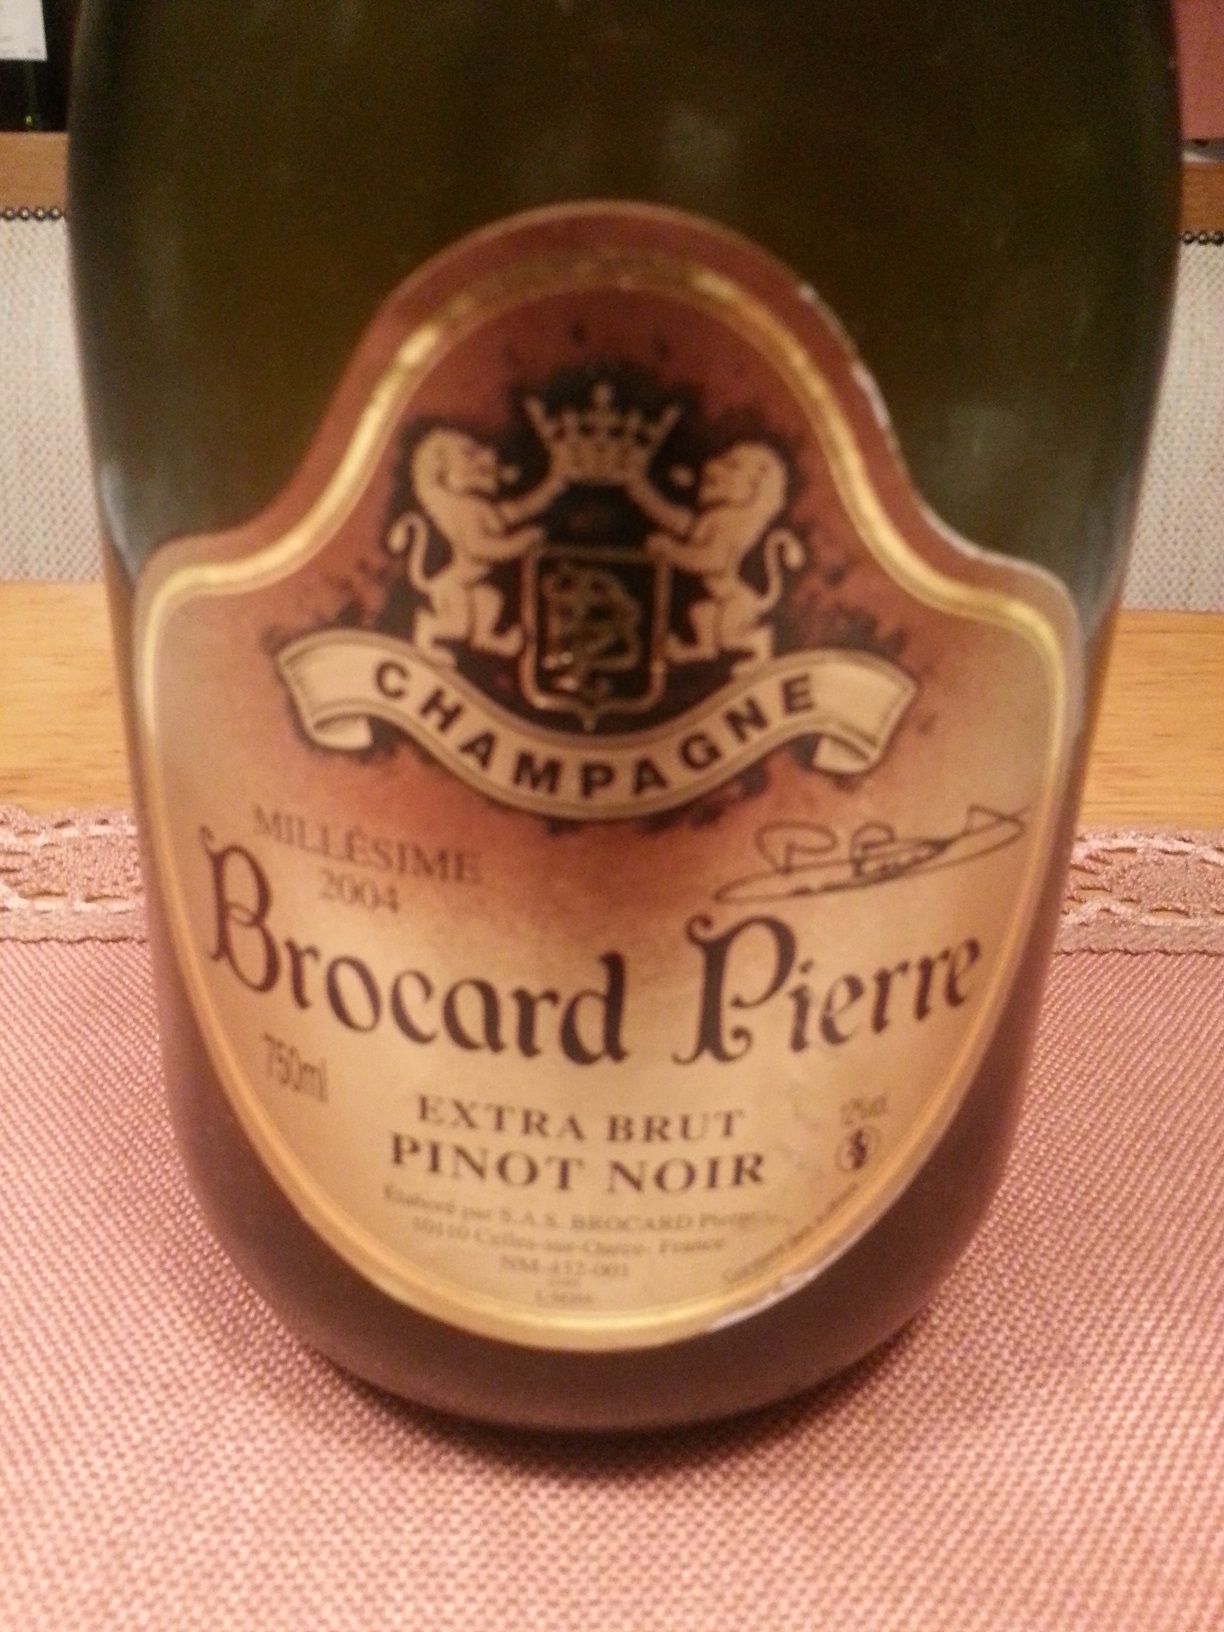 2004 Champagne Blanc de Noirs extra brut | Brocard